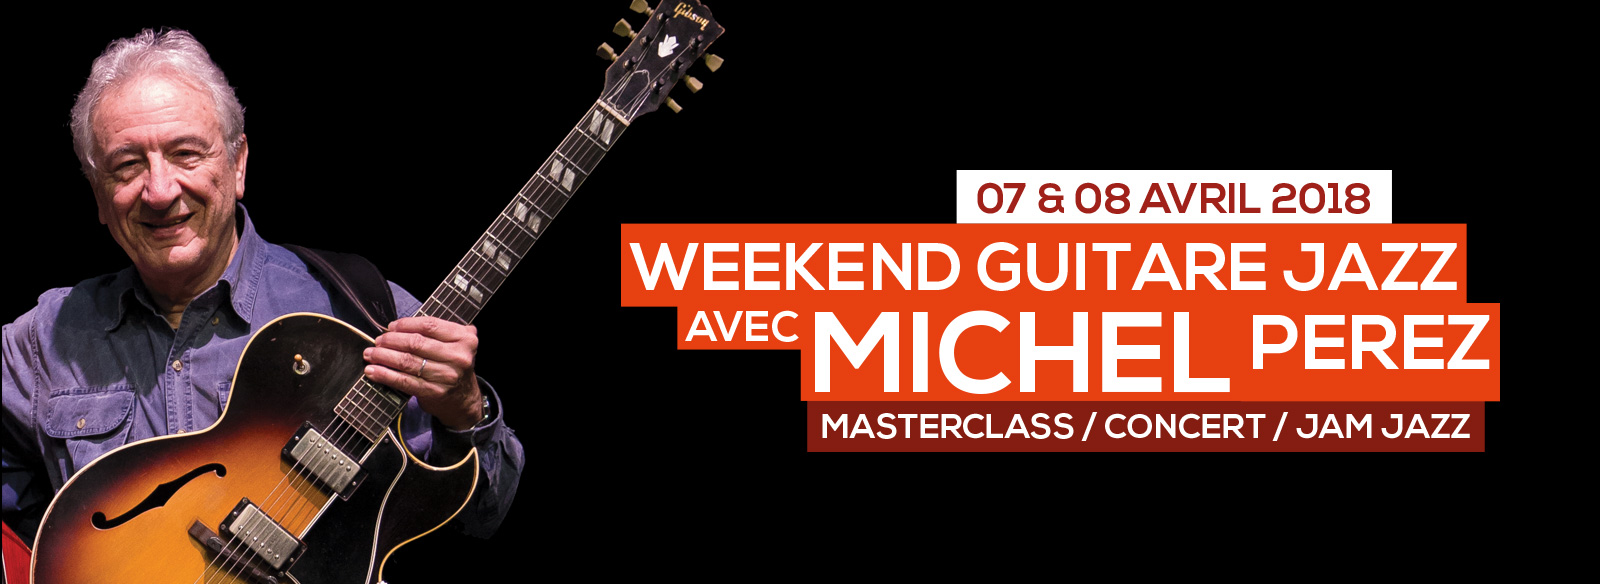 Weekend guitare jazz avec Michel Perez